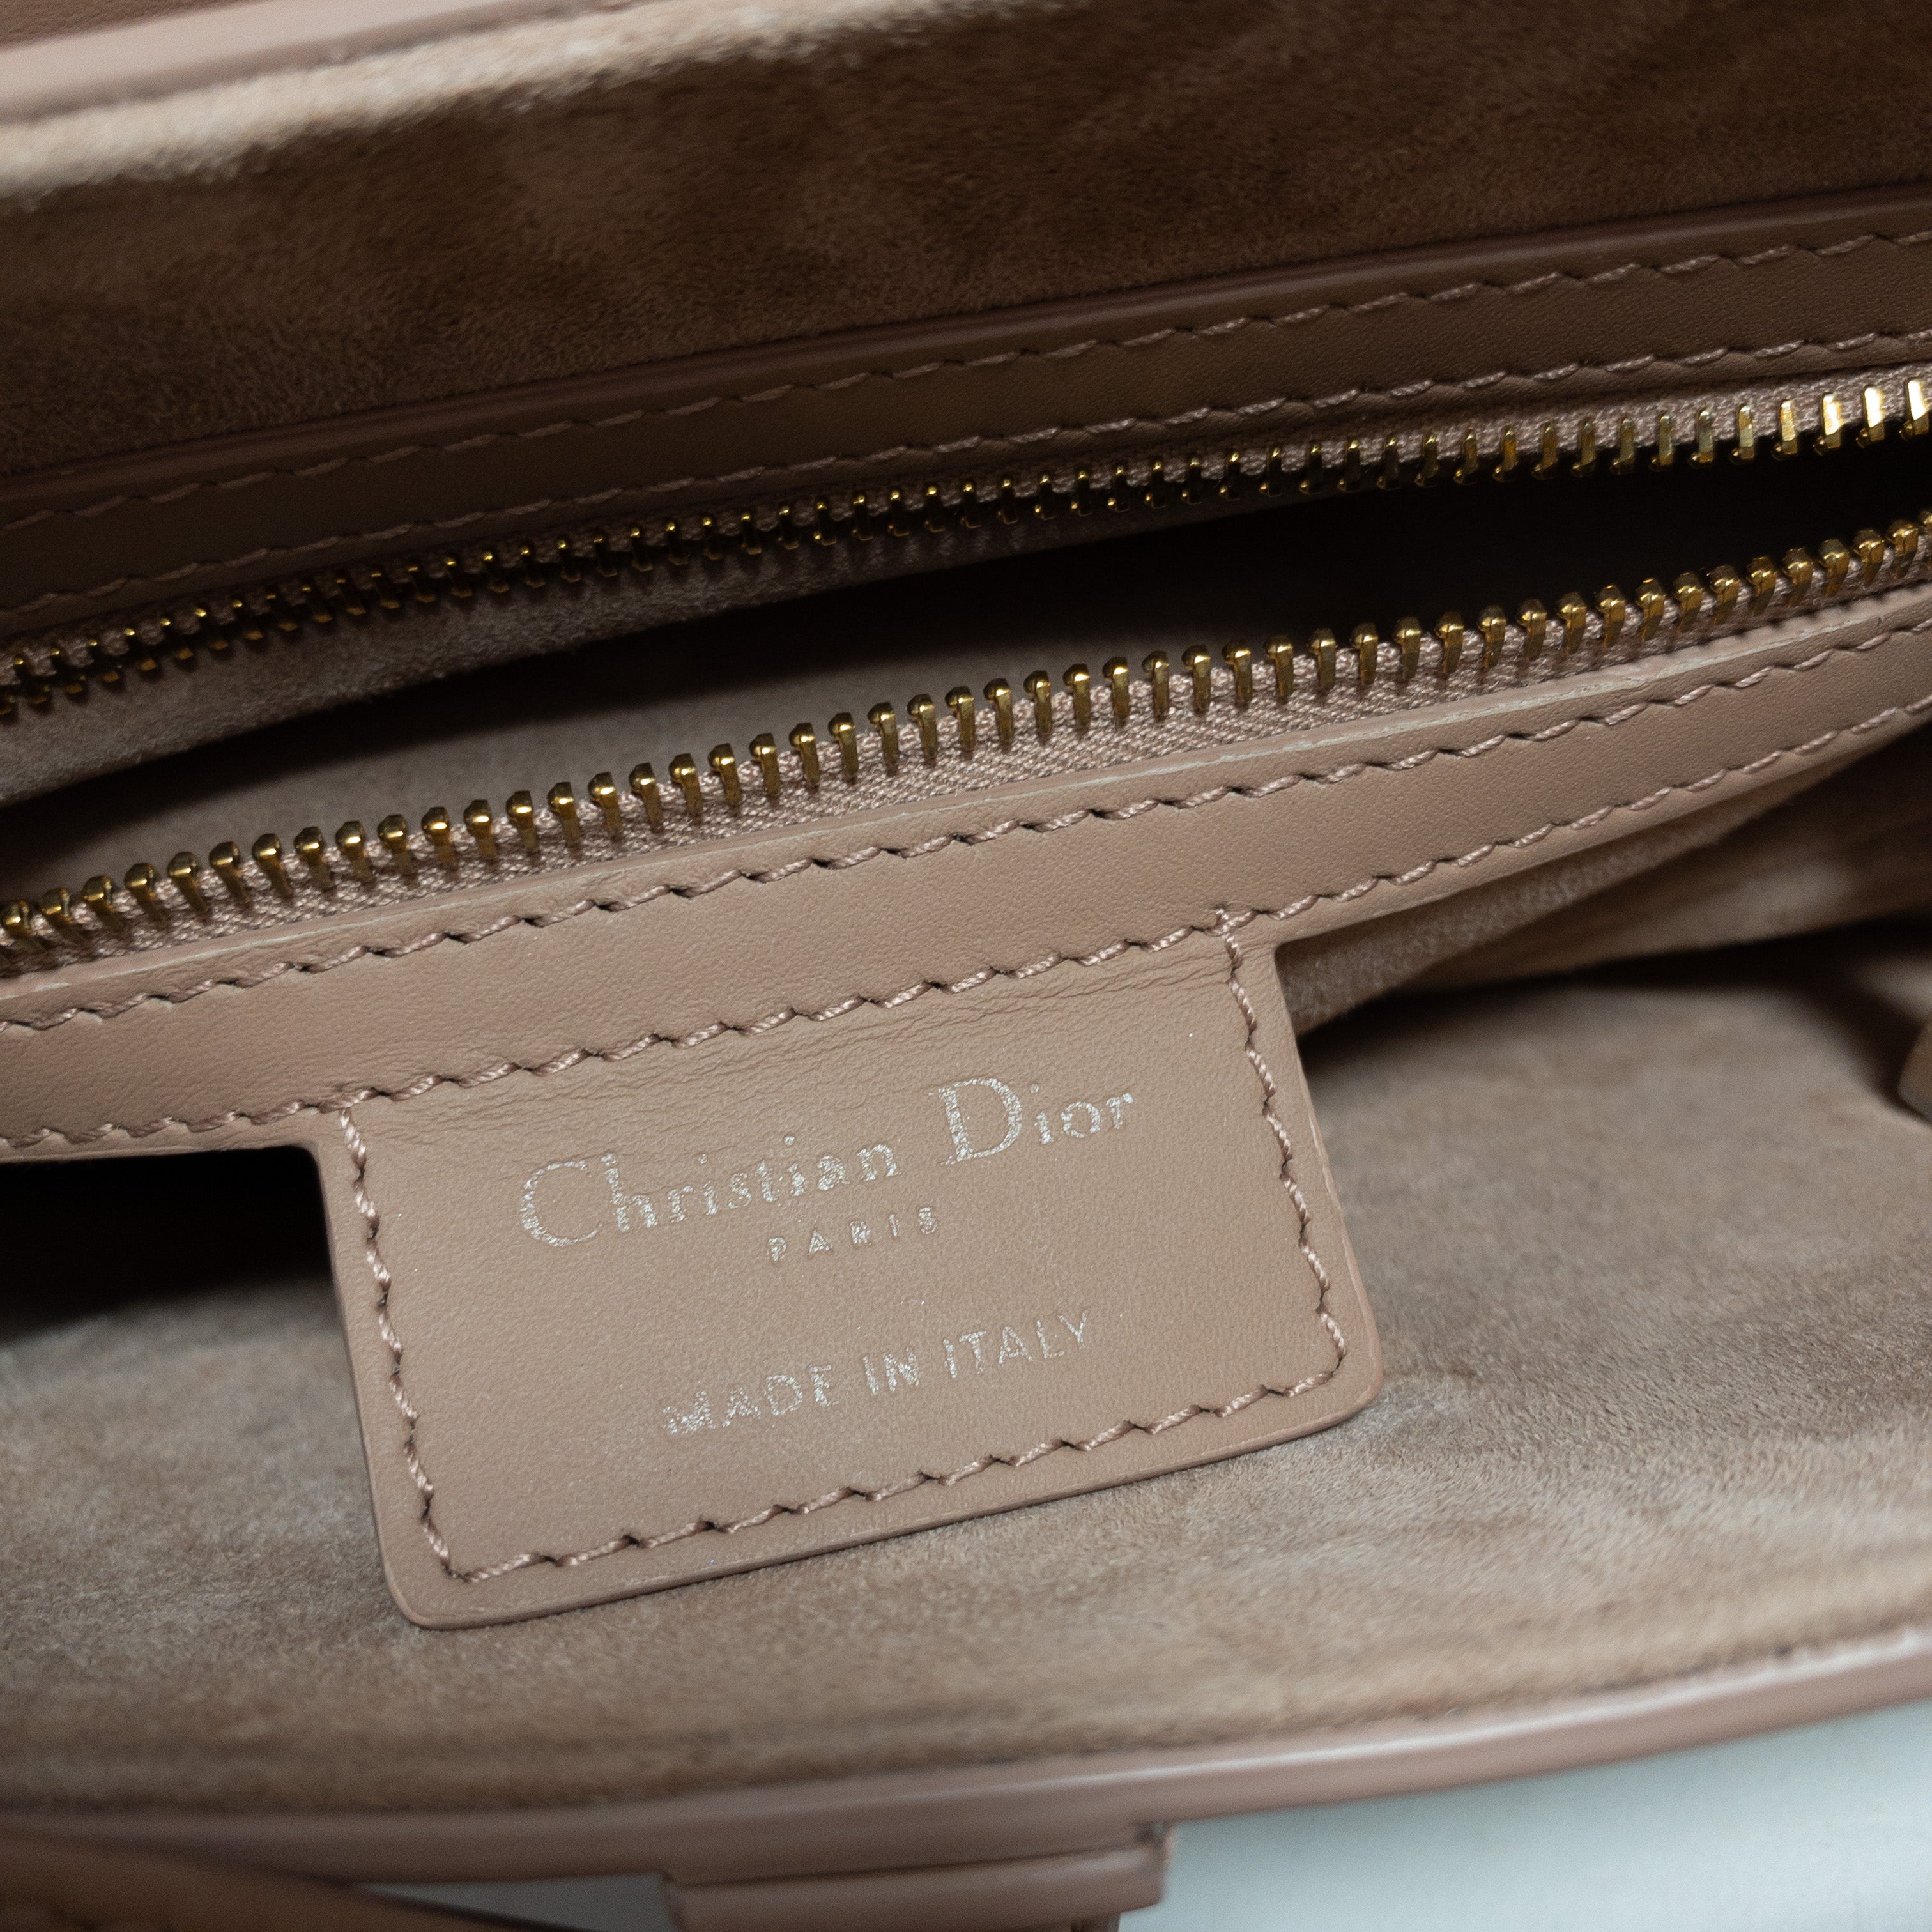 Dior Matte Blush Leather Medium Saddle Bag